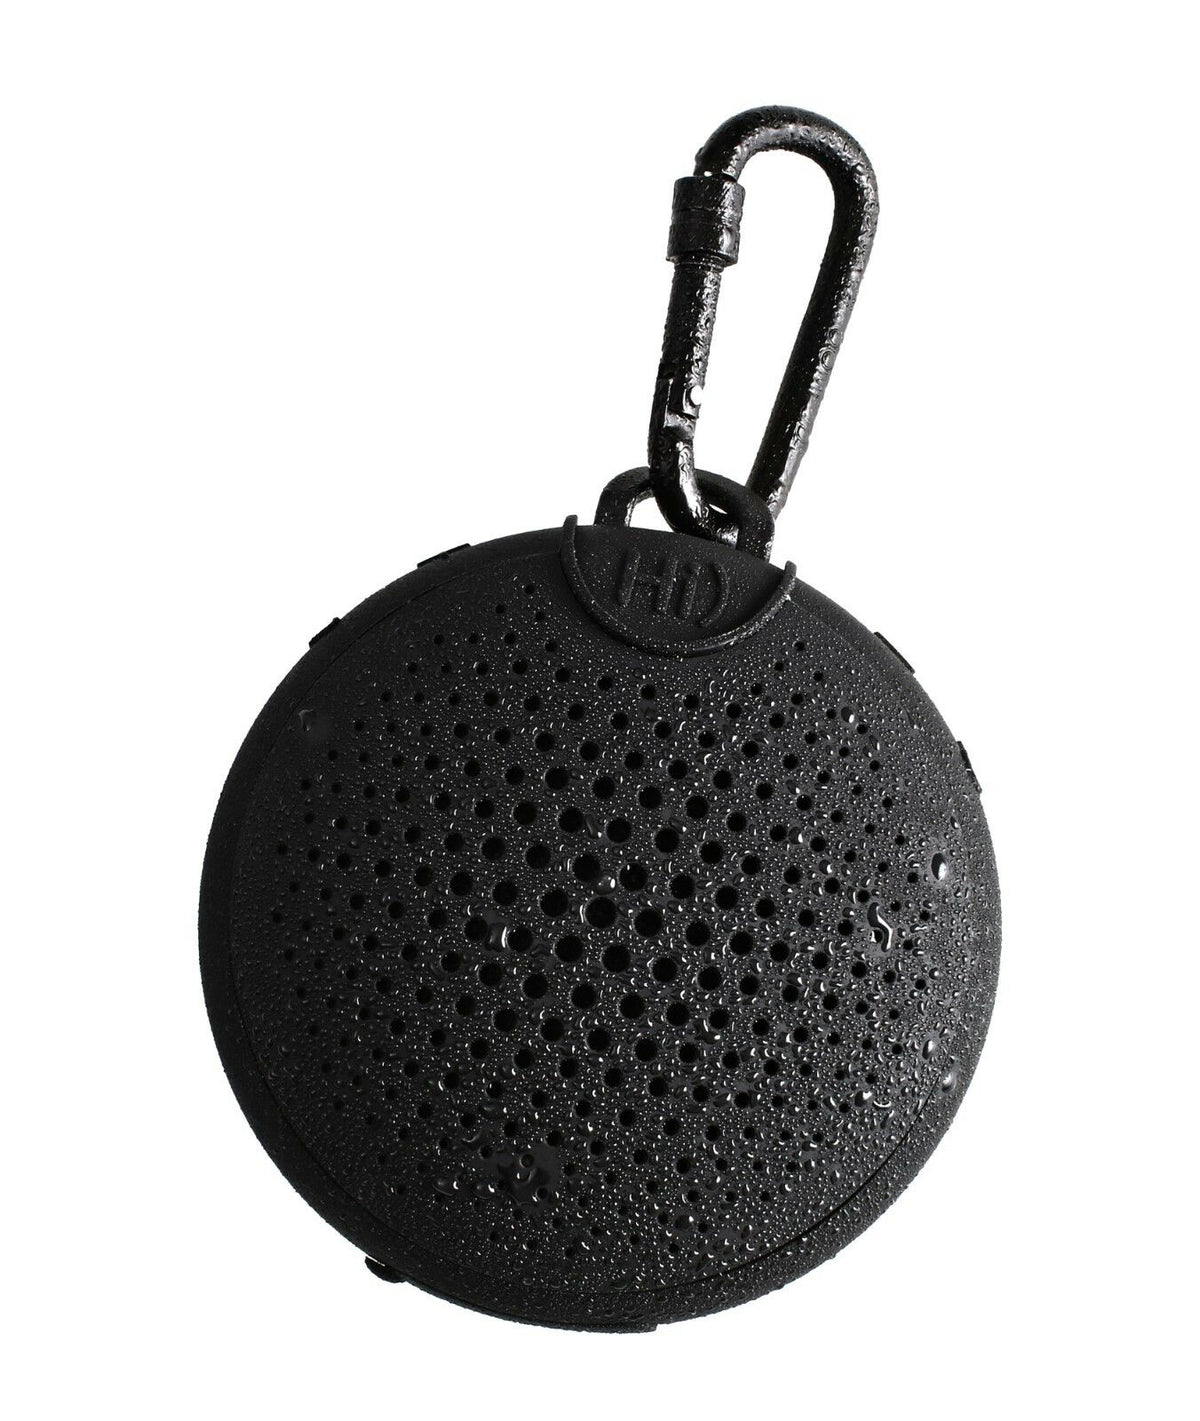 [OPEN BOX] BOOMPODS Aquablaster Bluetooth Speaker - Black